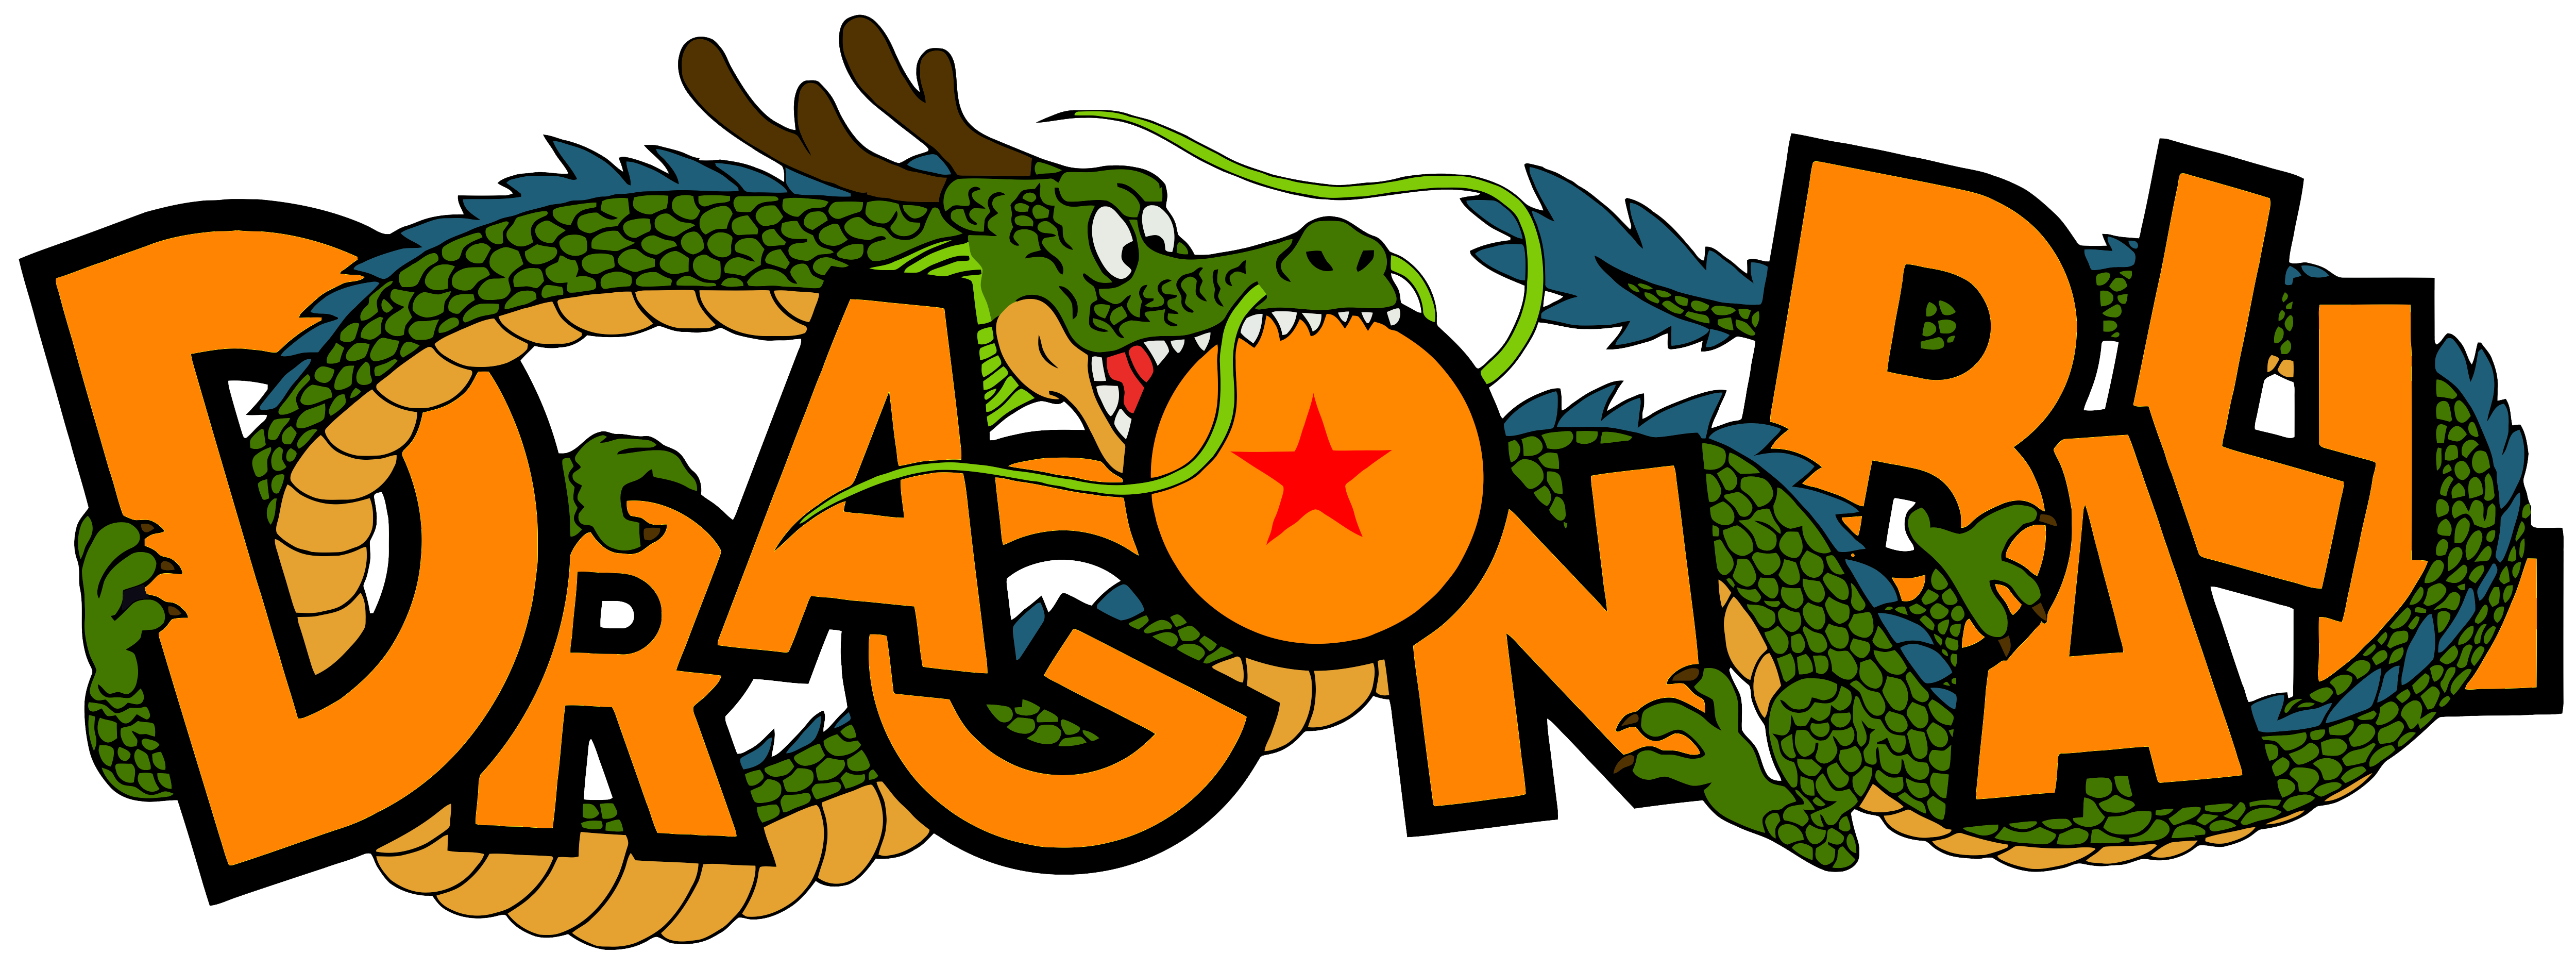 Download Dragon Ball Logo File HQ PNG Image | FreePNGImg